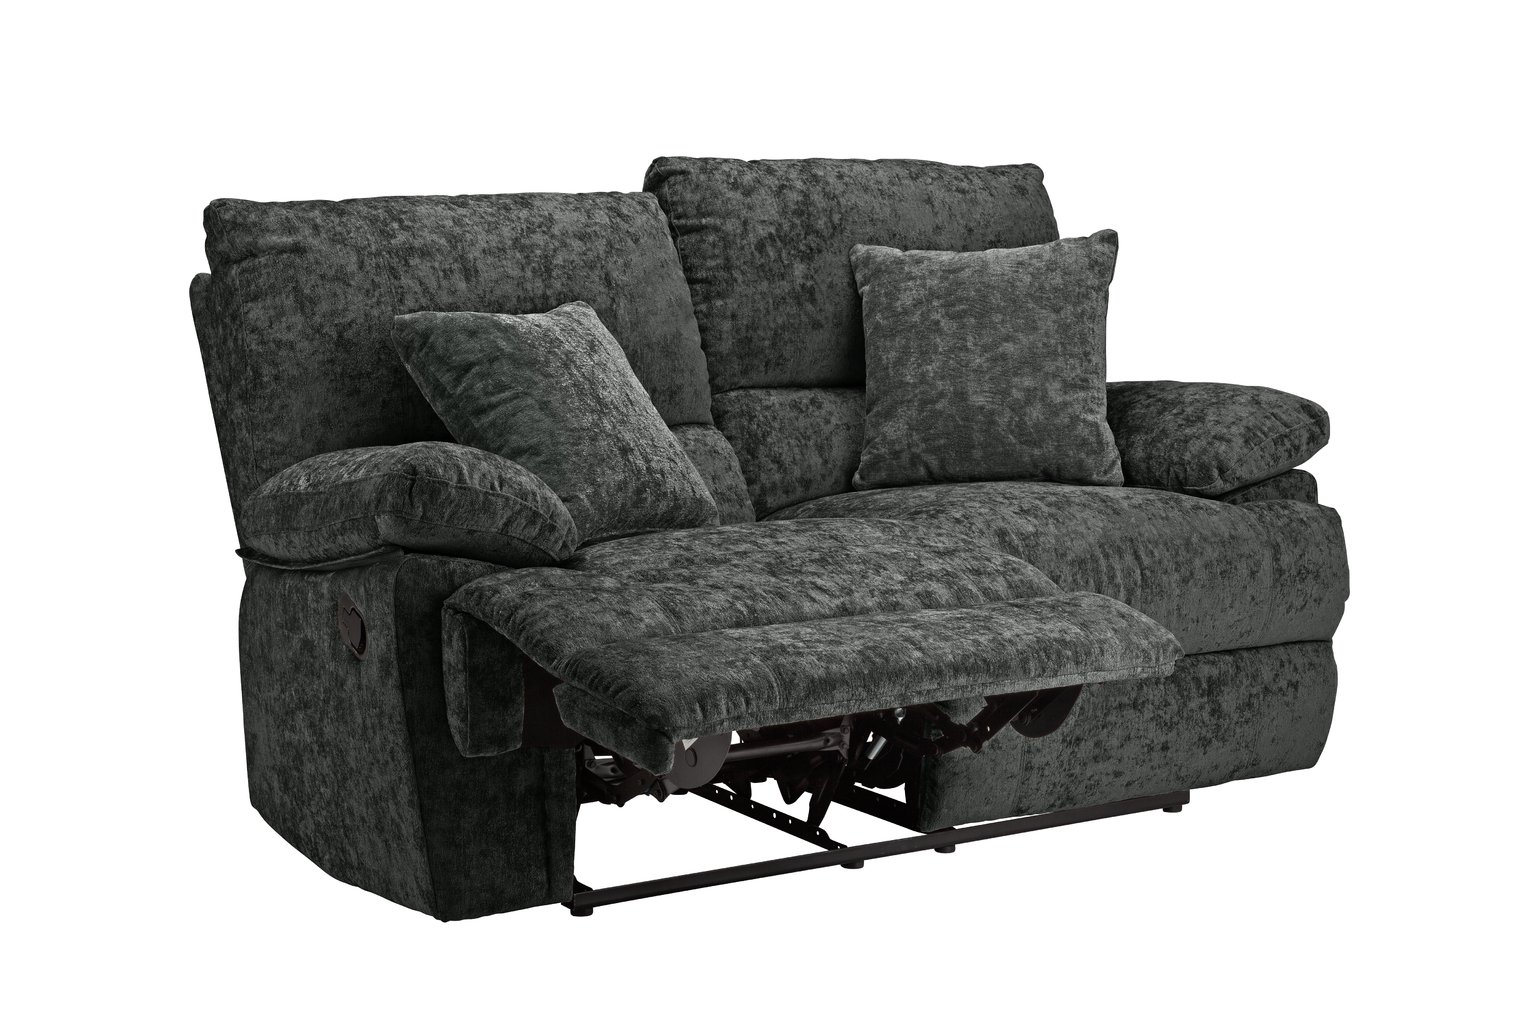 Argos Home Carmilla 2 Seater Fabric Recliner Sofa Review